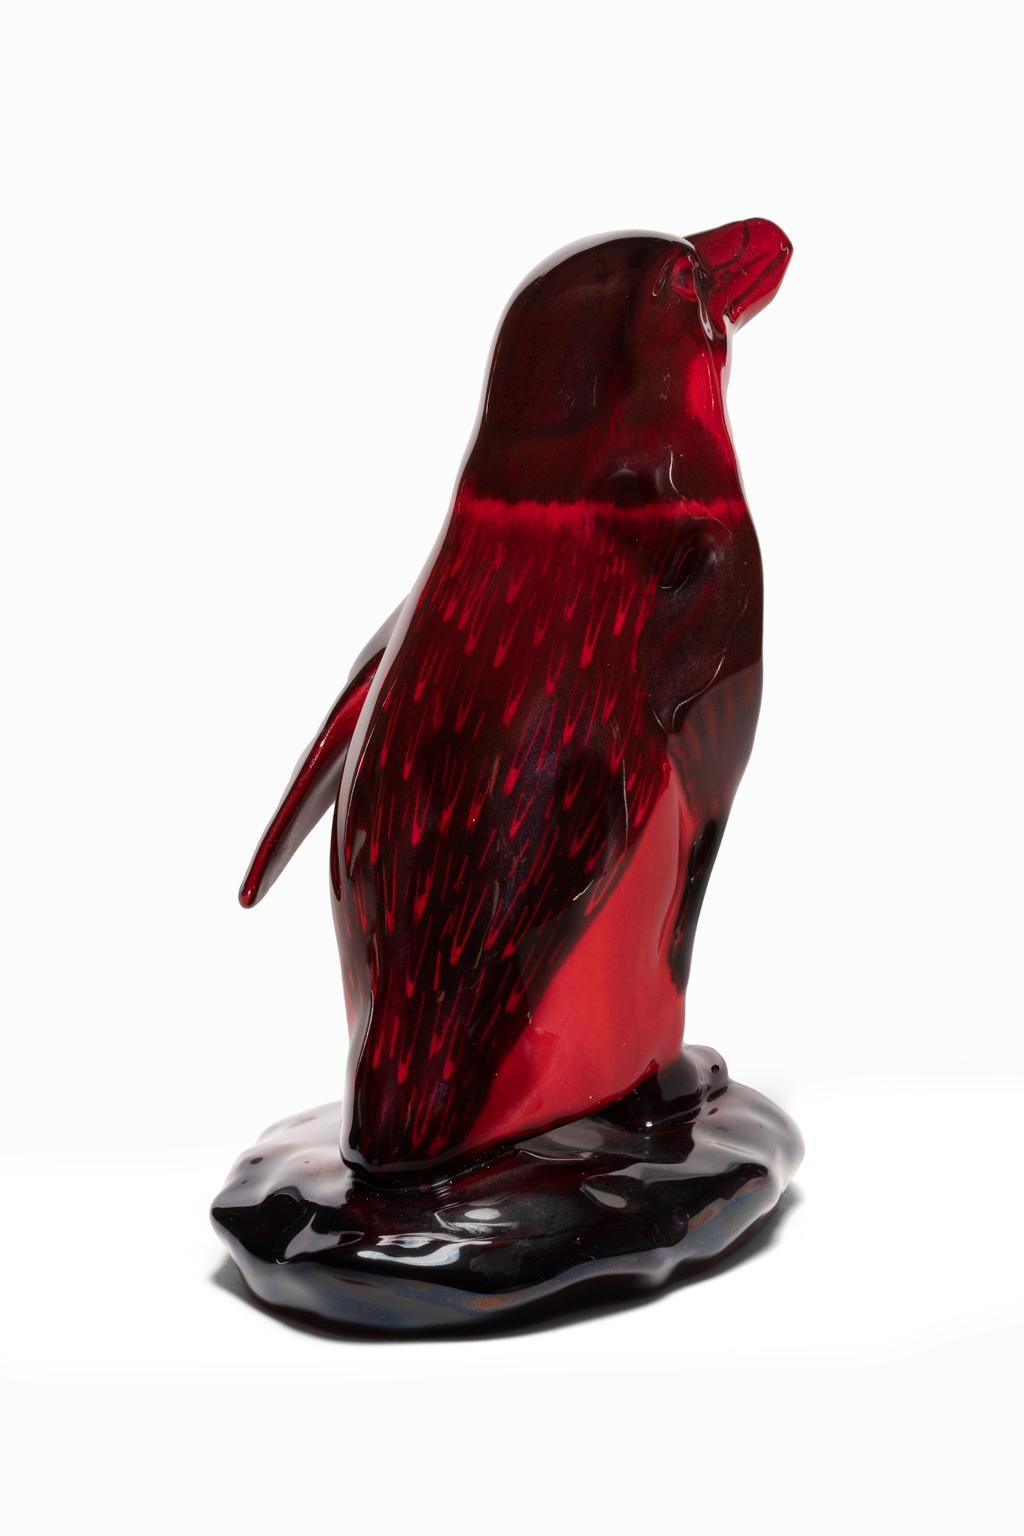 Glazed  Royal Doulton Red Flambe Porcelain Figurine 